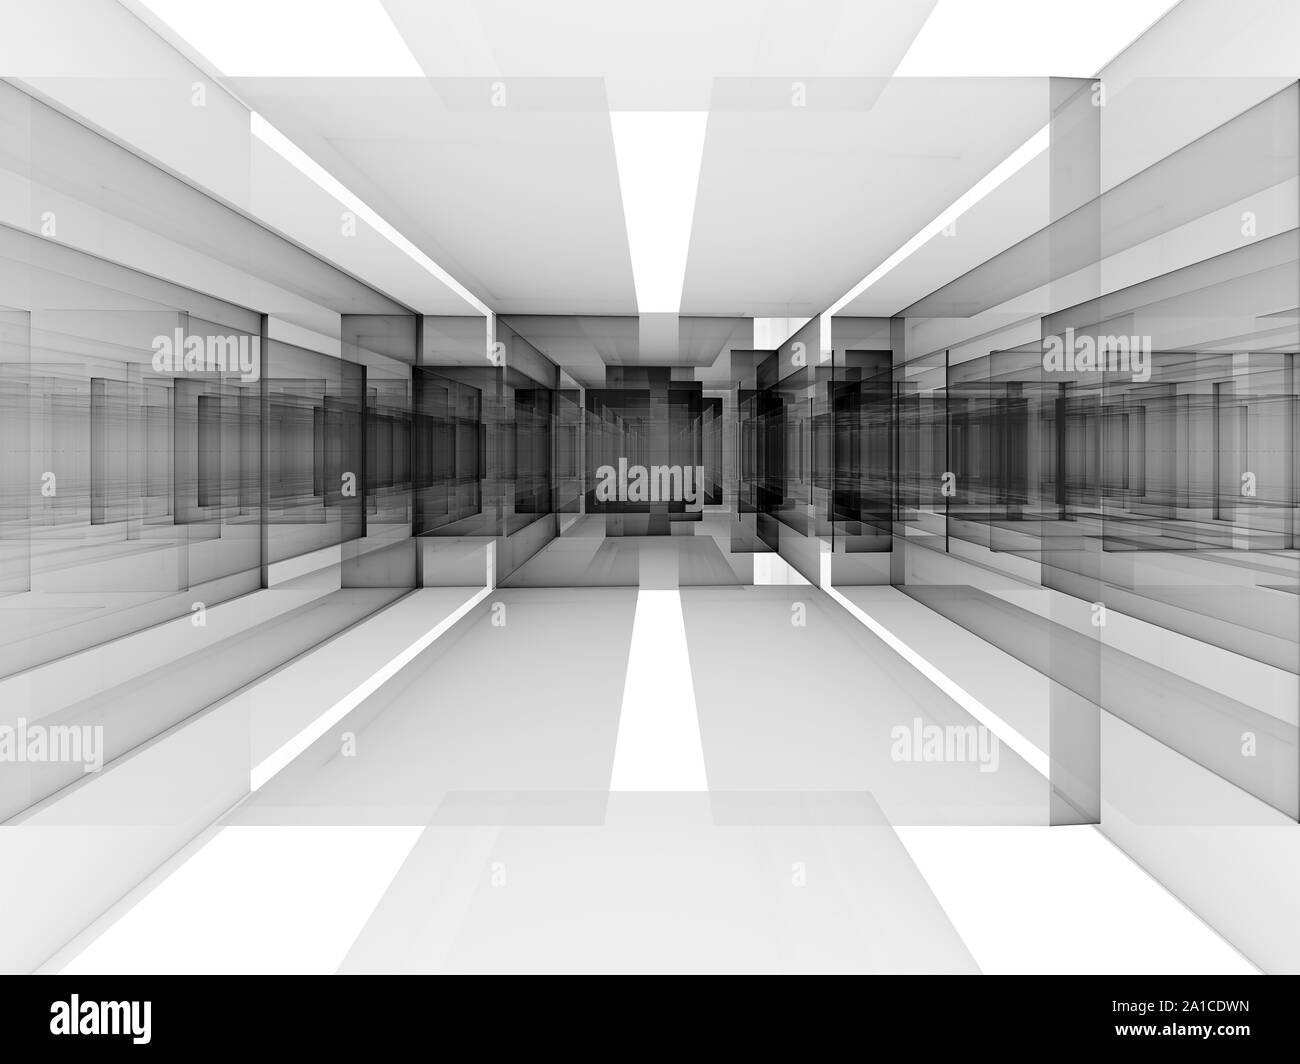 Abstrakte Portal oder Data Center - digital erzeugten Bild Stockfoto